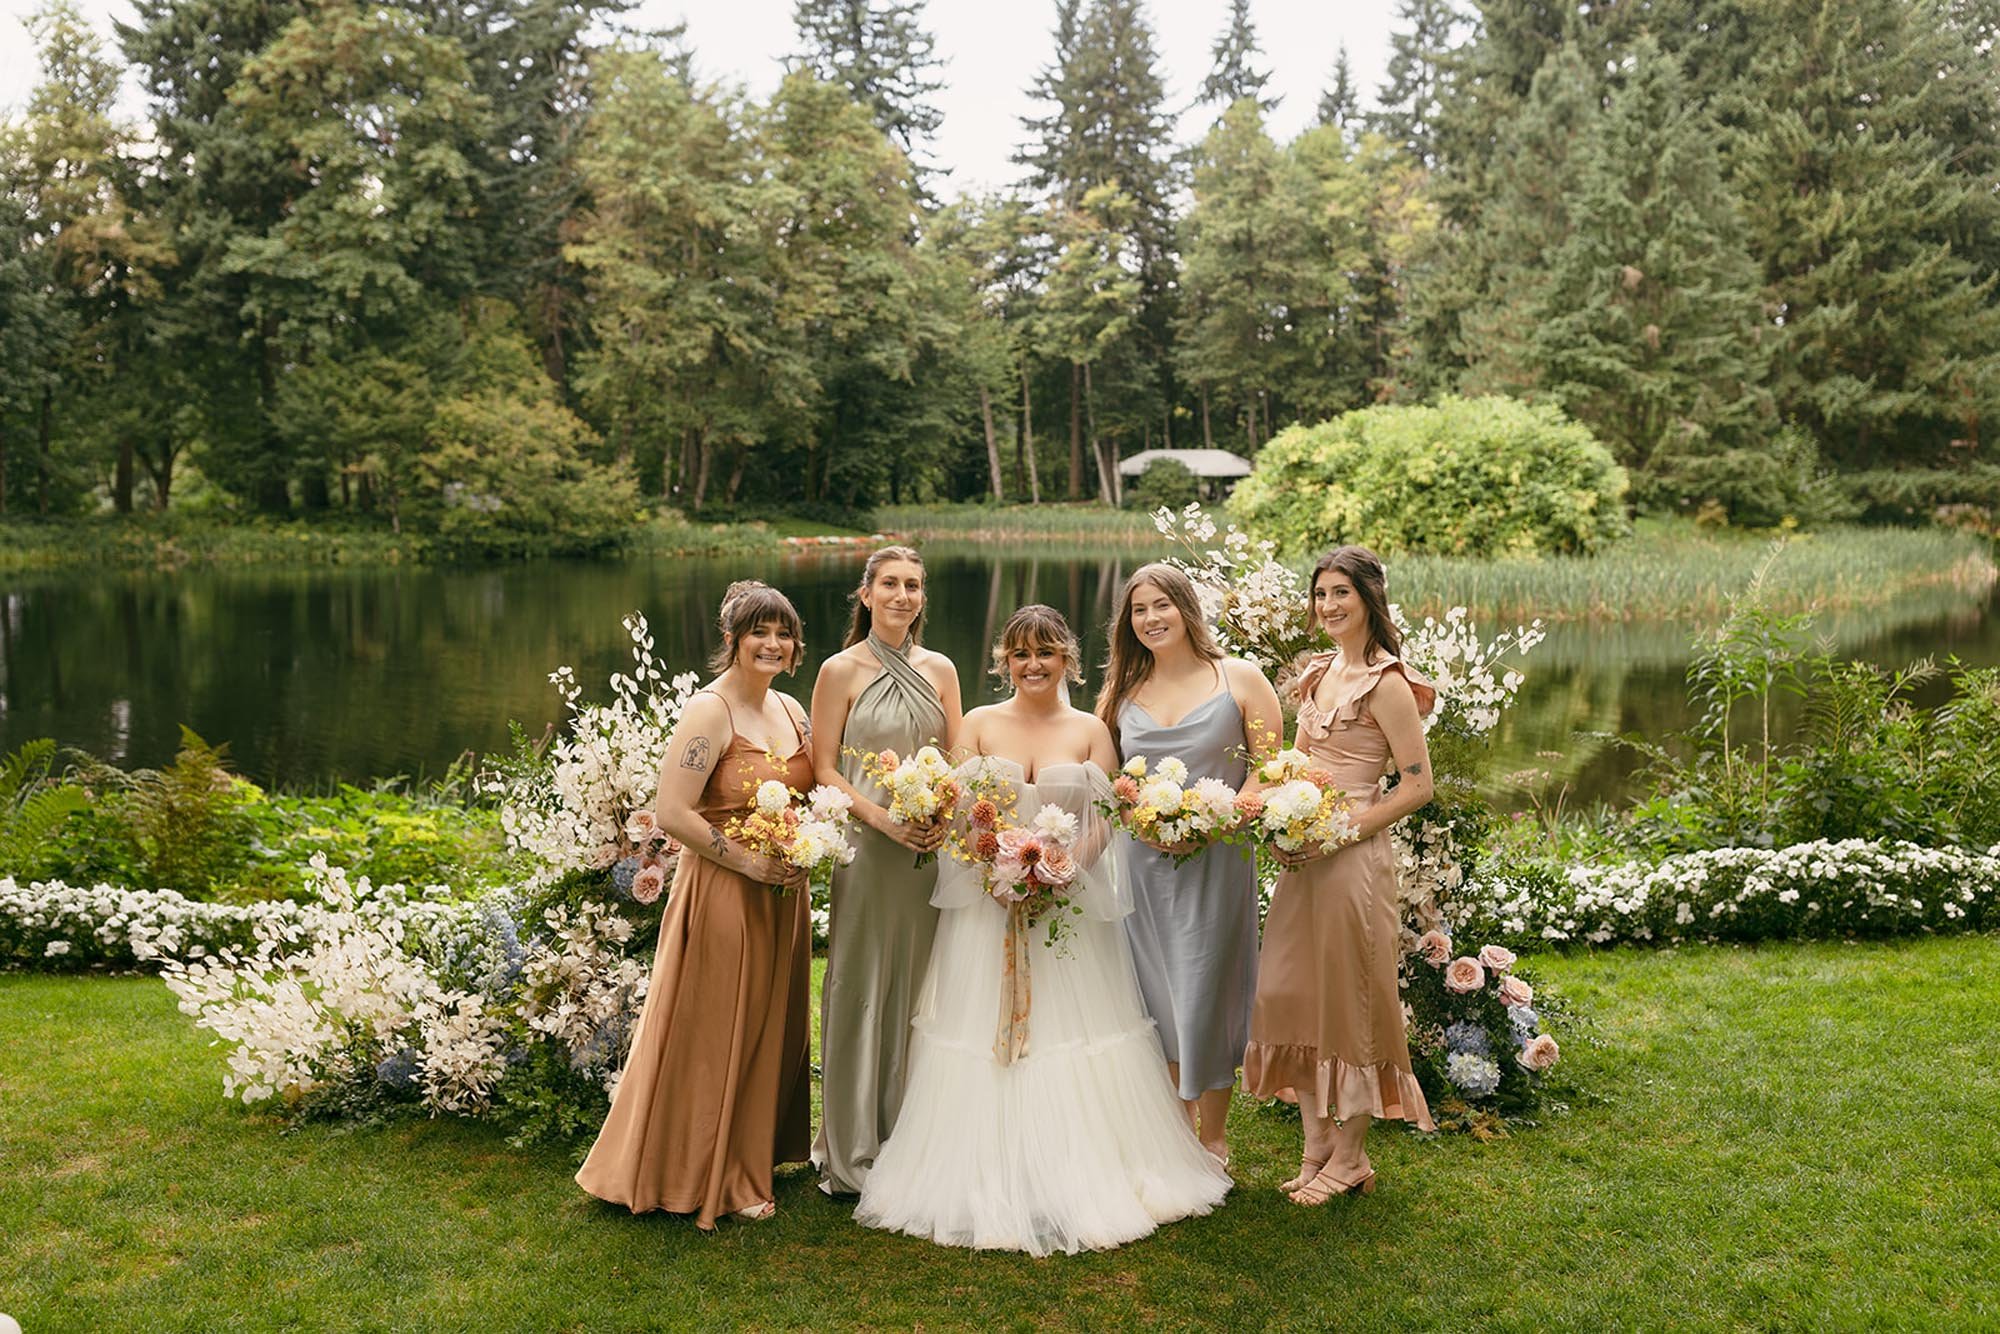 Alena-Leena-Armeria-Dress-for-a-Portland-Garden-Wedding-09.jpg